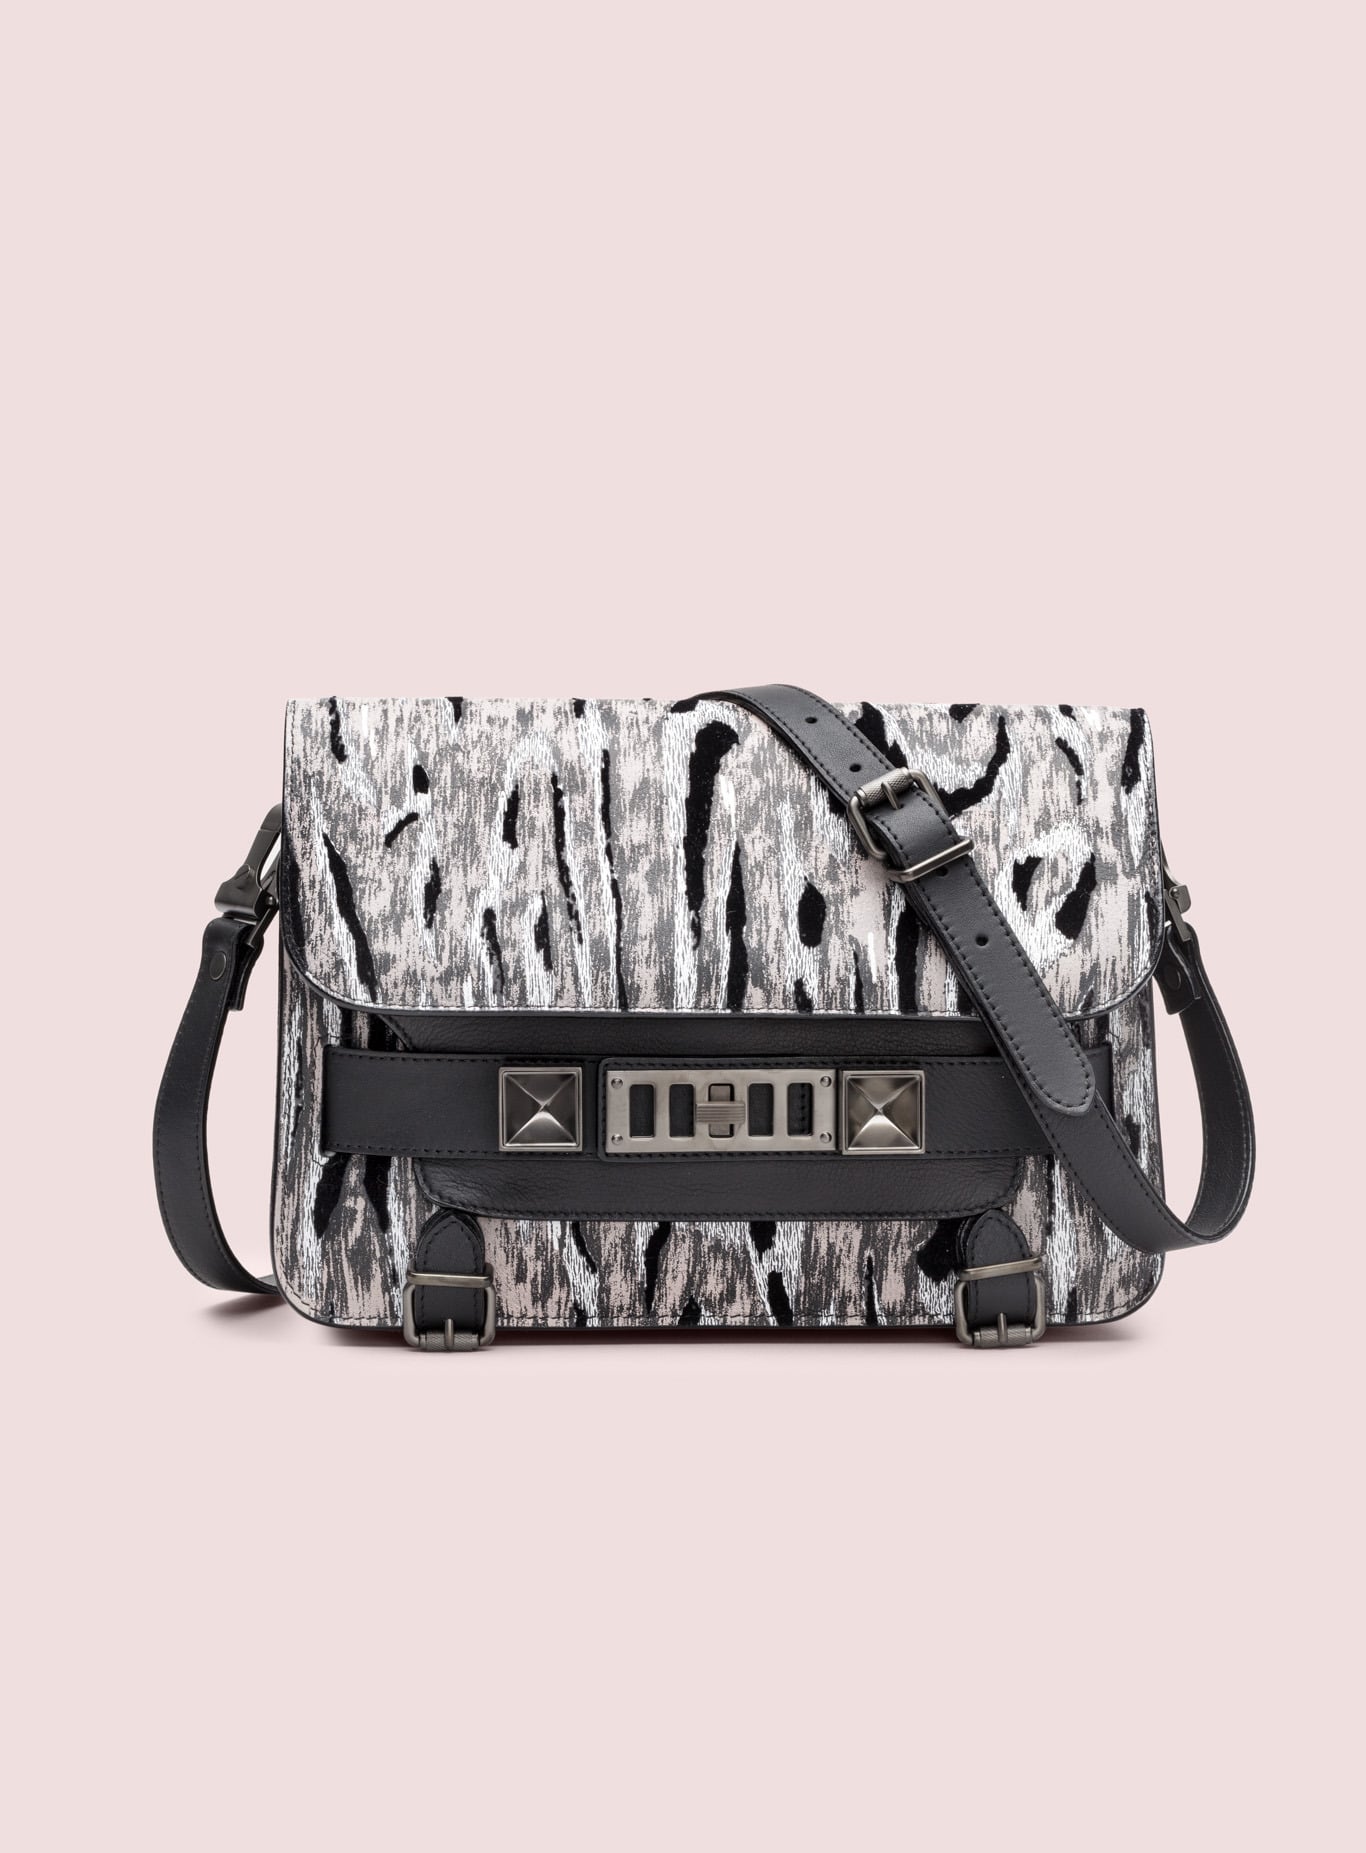 Proenza Schouler Slate:Light Grey:Black PS11 Classic Bag